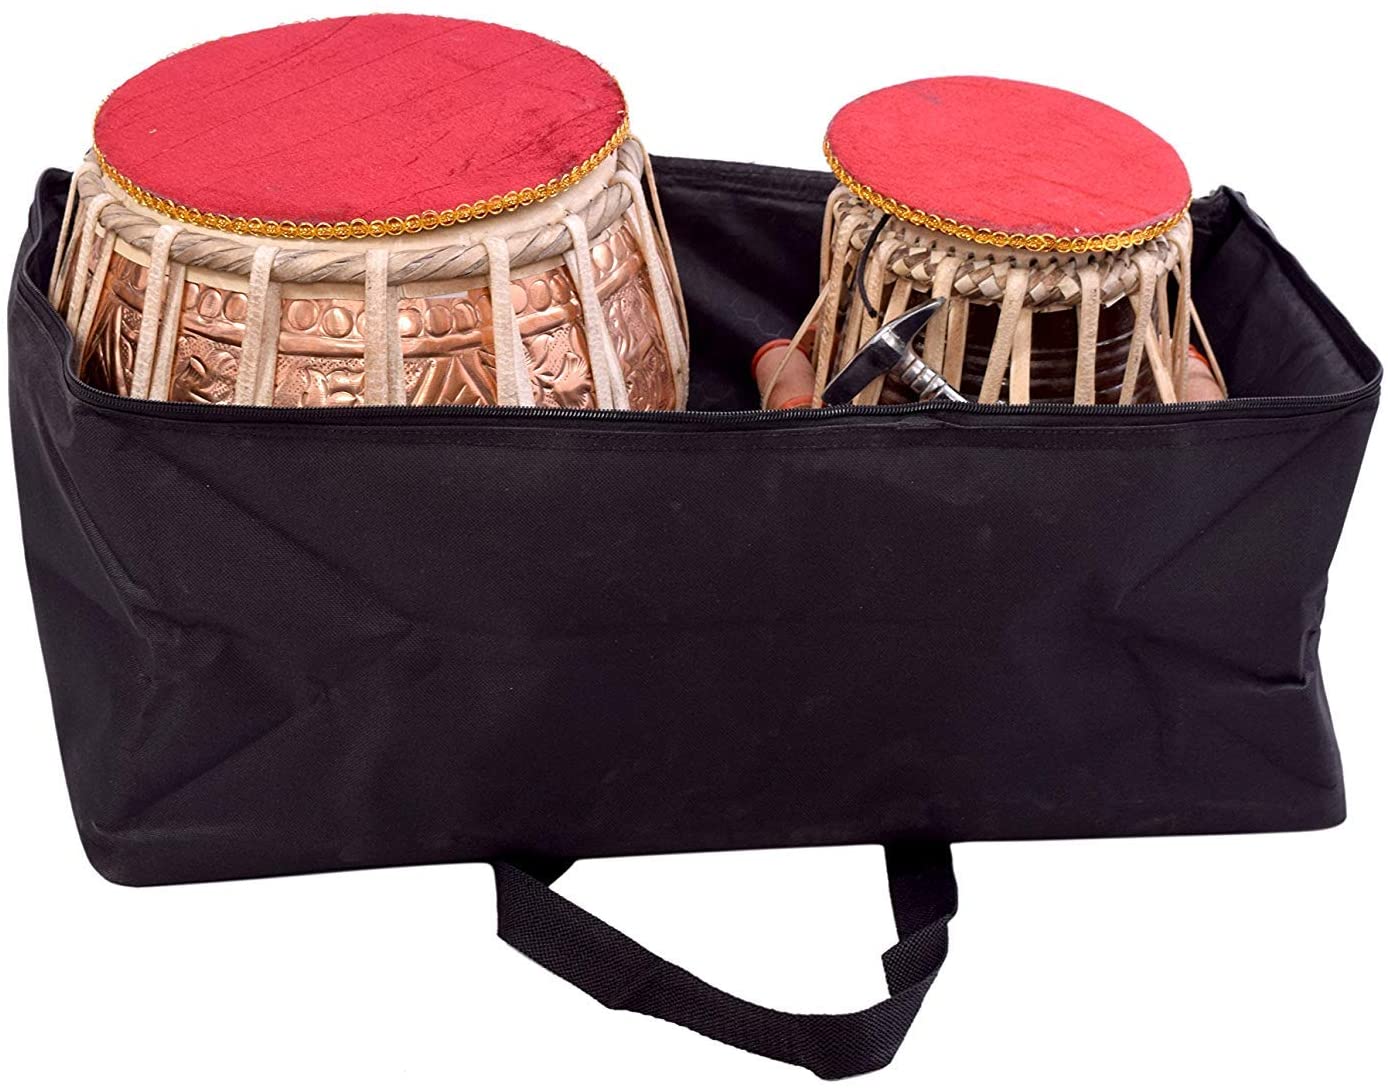 Tabla Drum Set Ganesha Design Hammer 5 Inch Pudi D# Scale Tabla 4 KG Copper Bayan Mahogany wood Dayan with Padded Bag Cover SAI Musical Concert Quality Cushions 